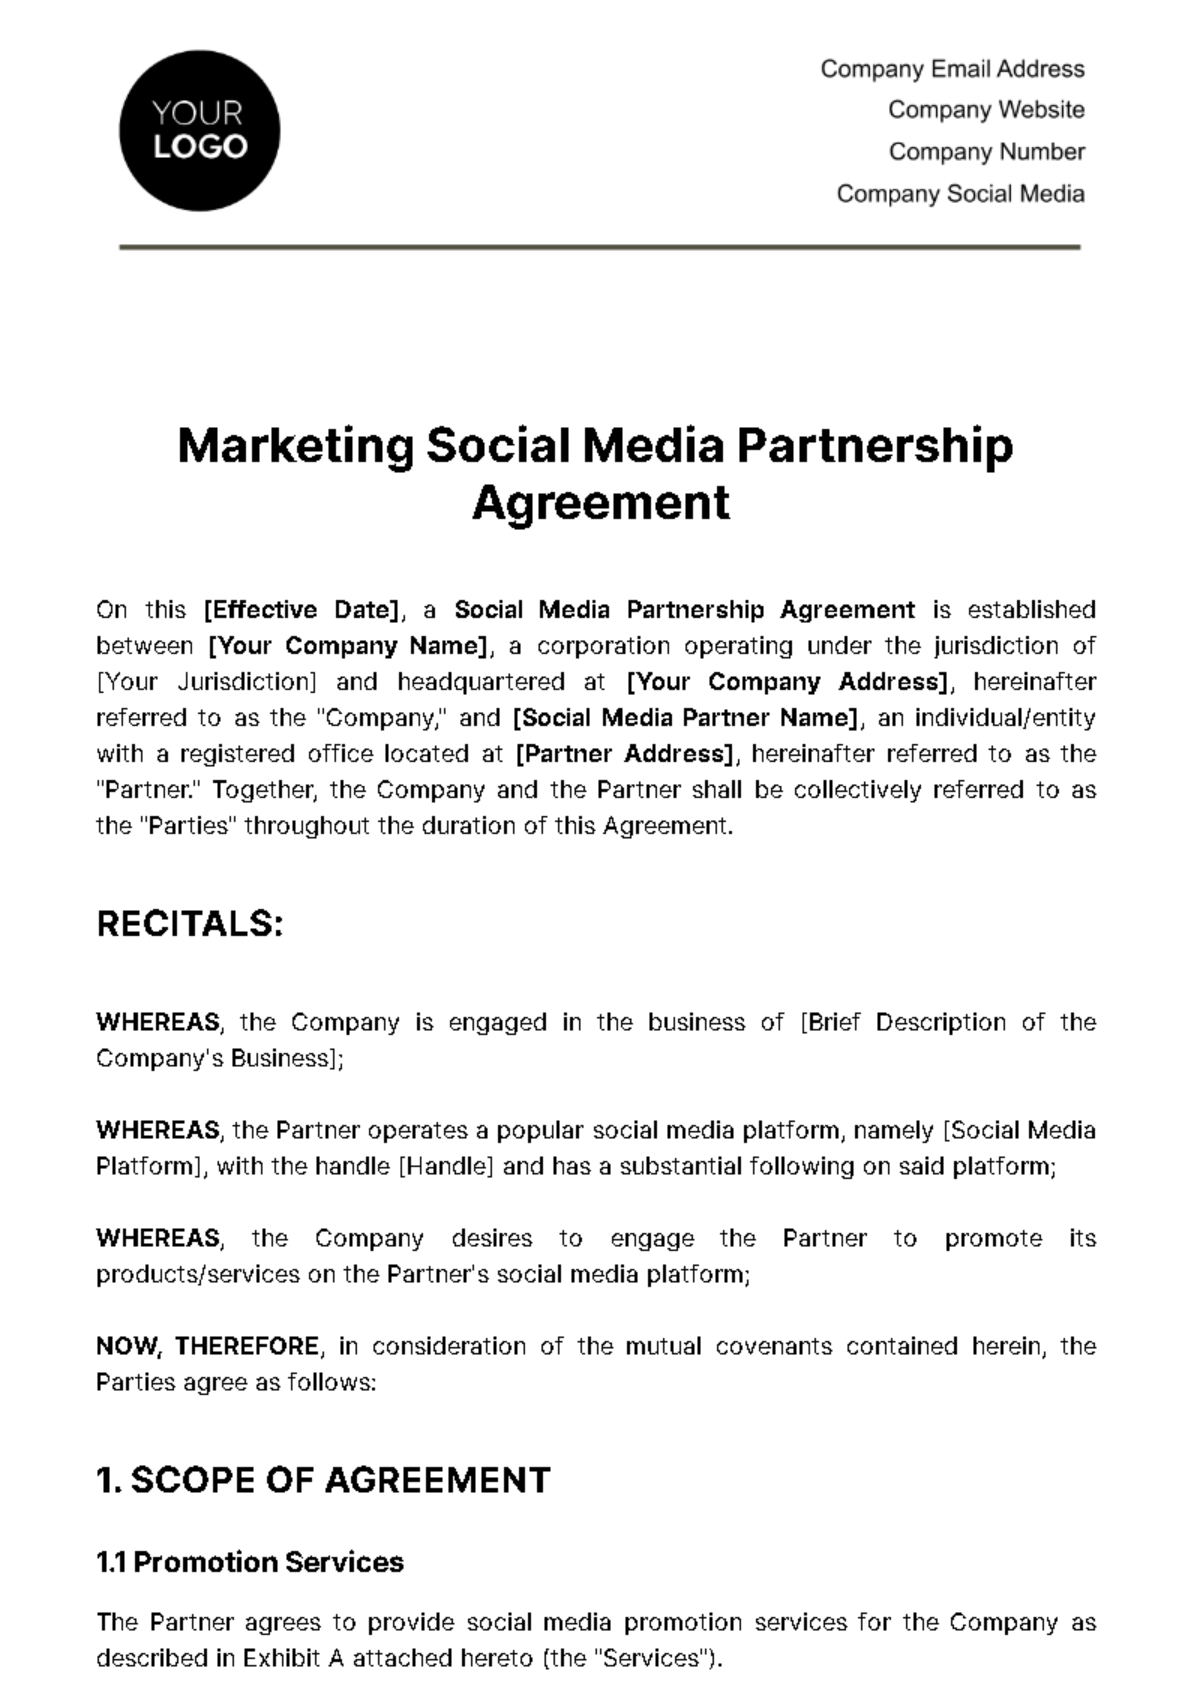 Marketing Social Media Partnership Agreement Template